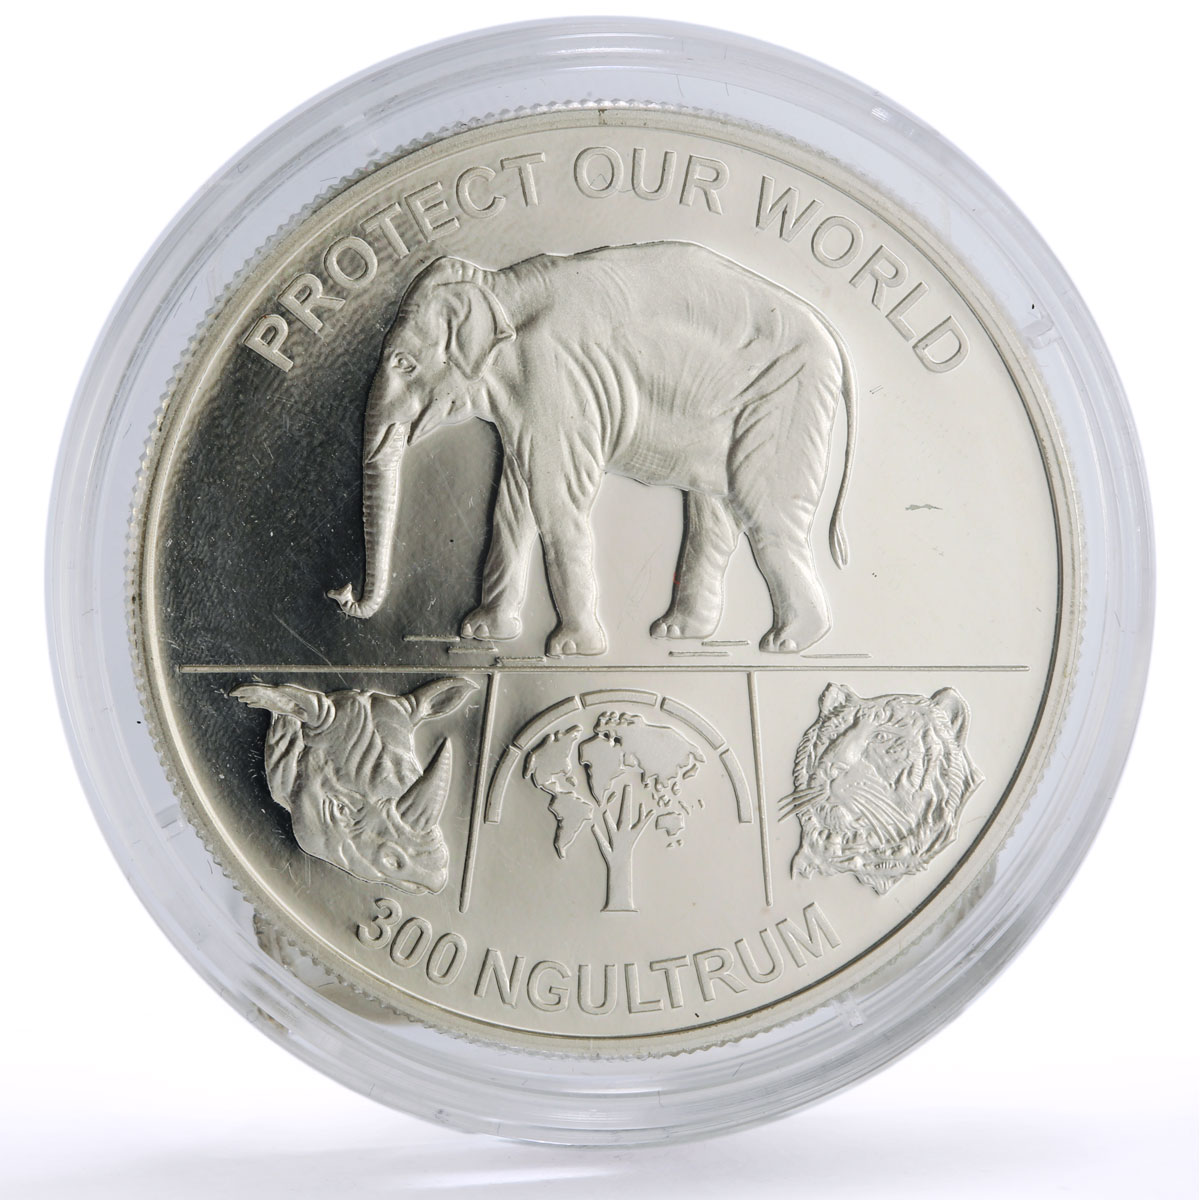 Bhutan 300 ngultrum Conservation Wildlife Elephant Rhino Tiger silver coin 1993